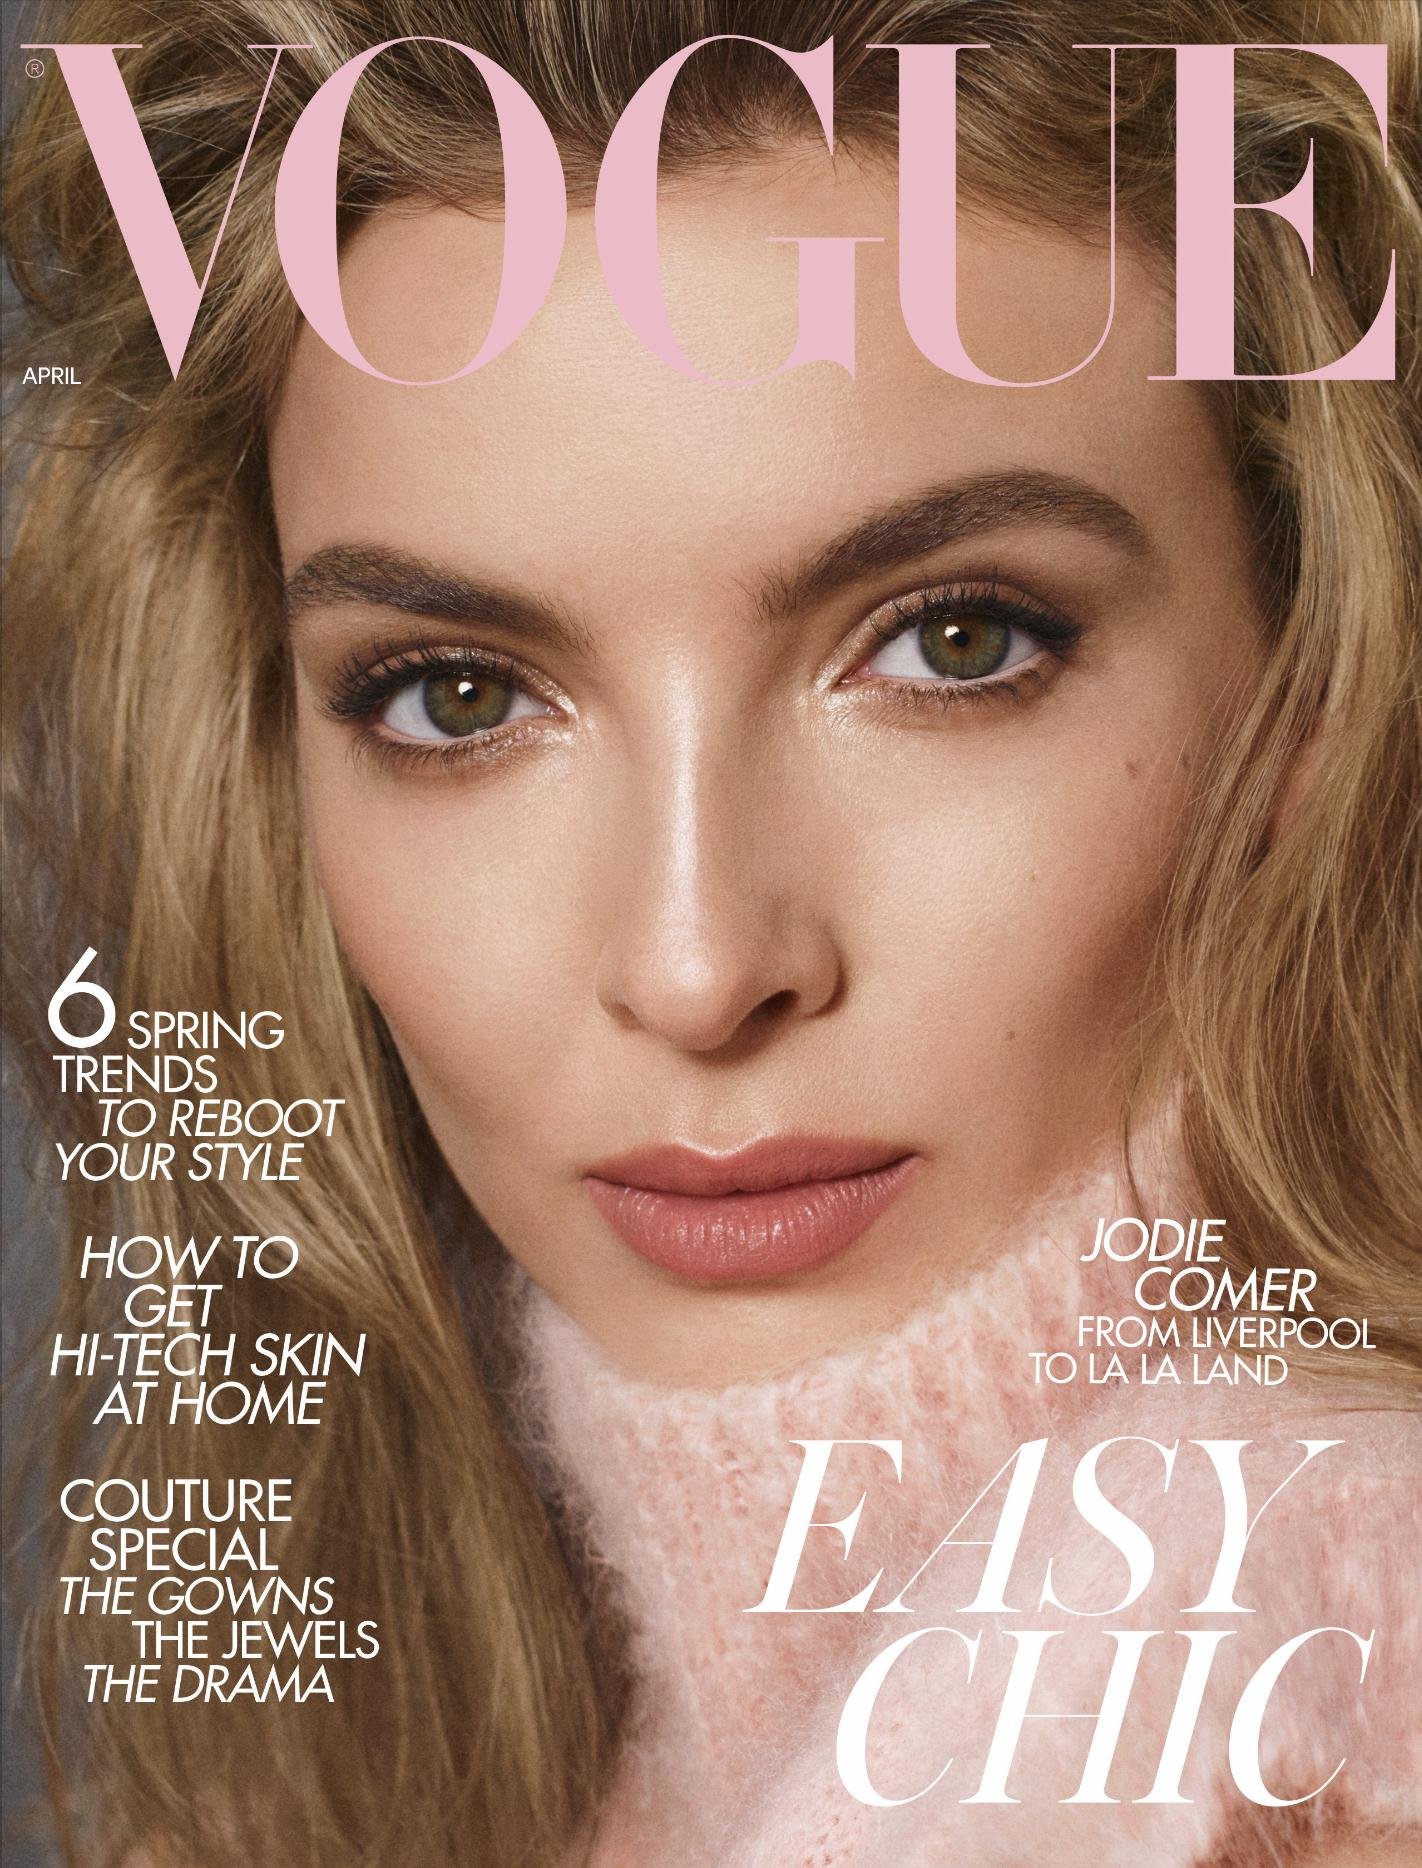 Vogue April Cover.jpg